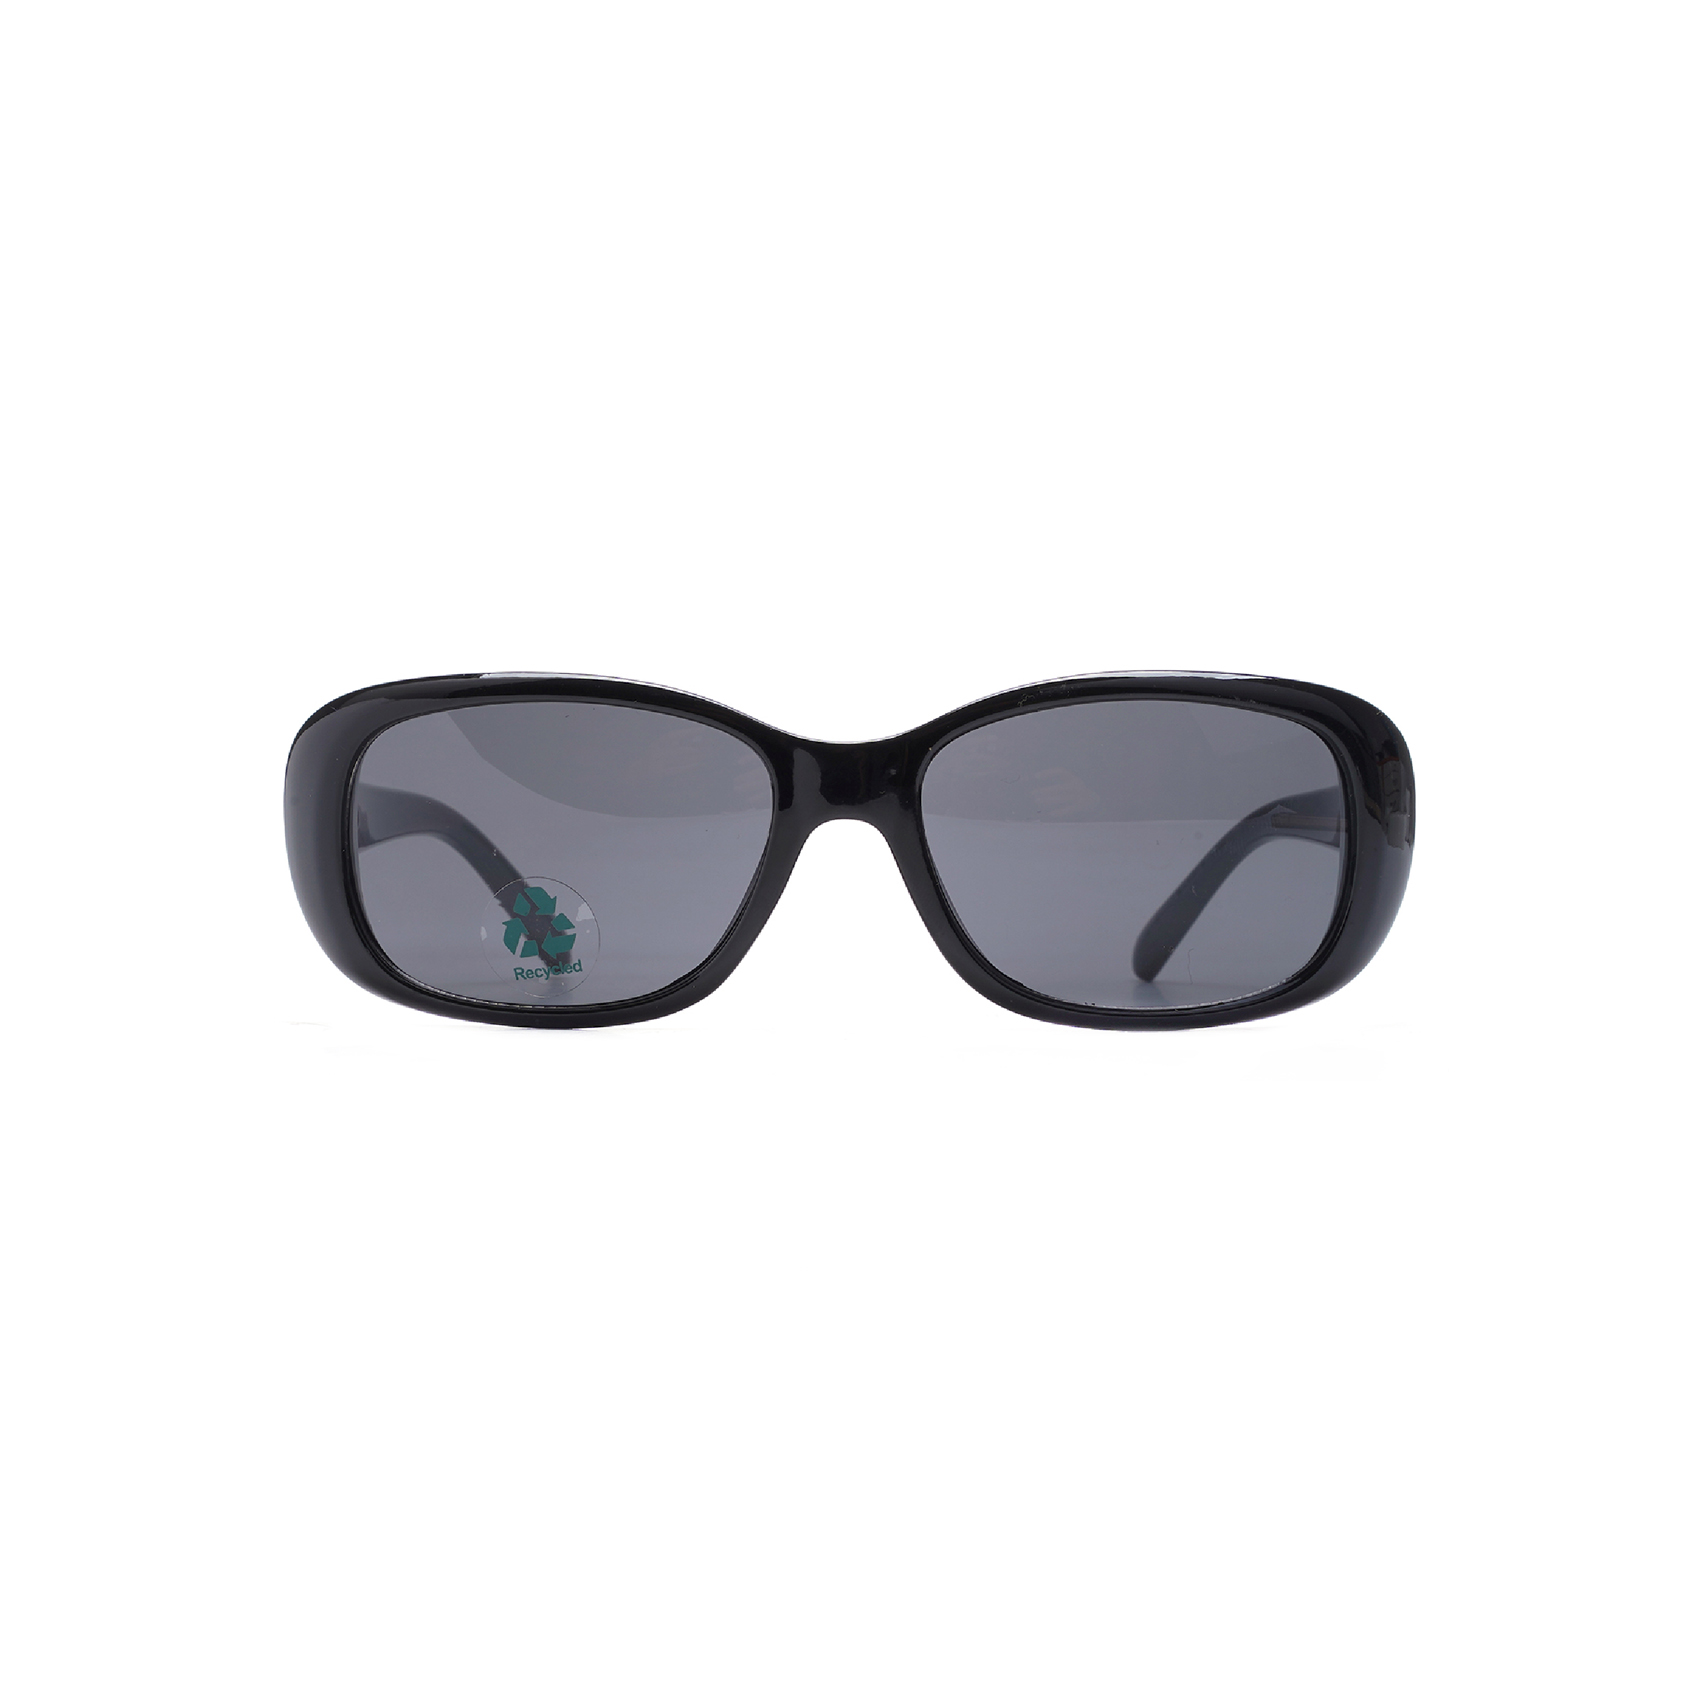 Stylish Designer Rectangular Sunglasses with Jewelry Elements Recycled Plastic Sunglasses Wholesale